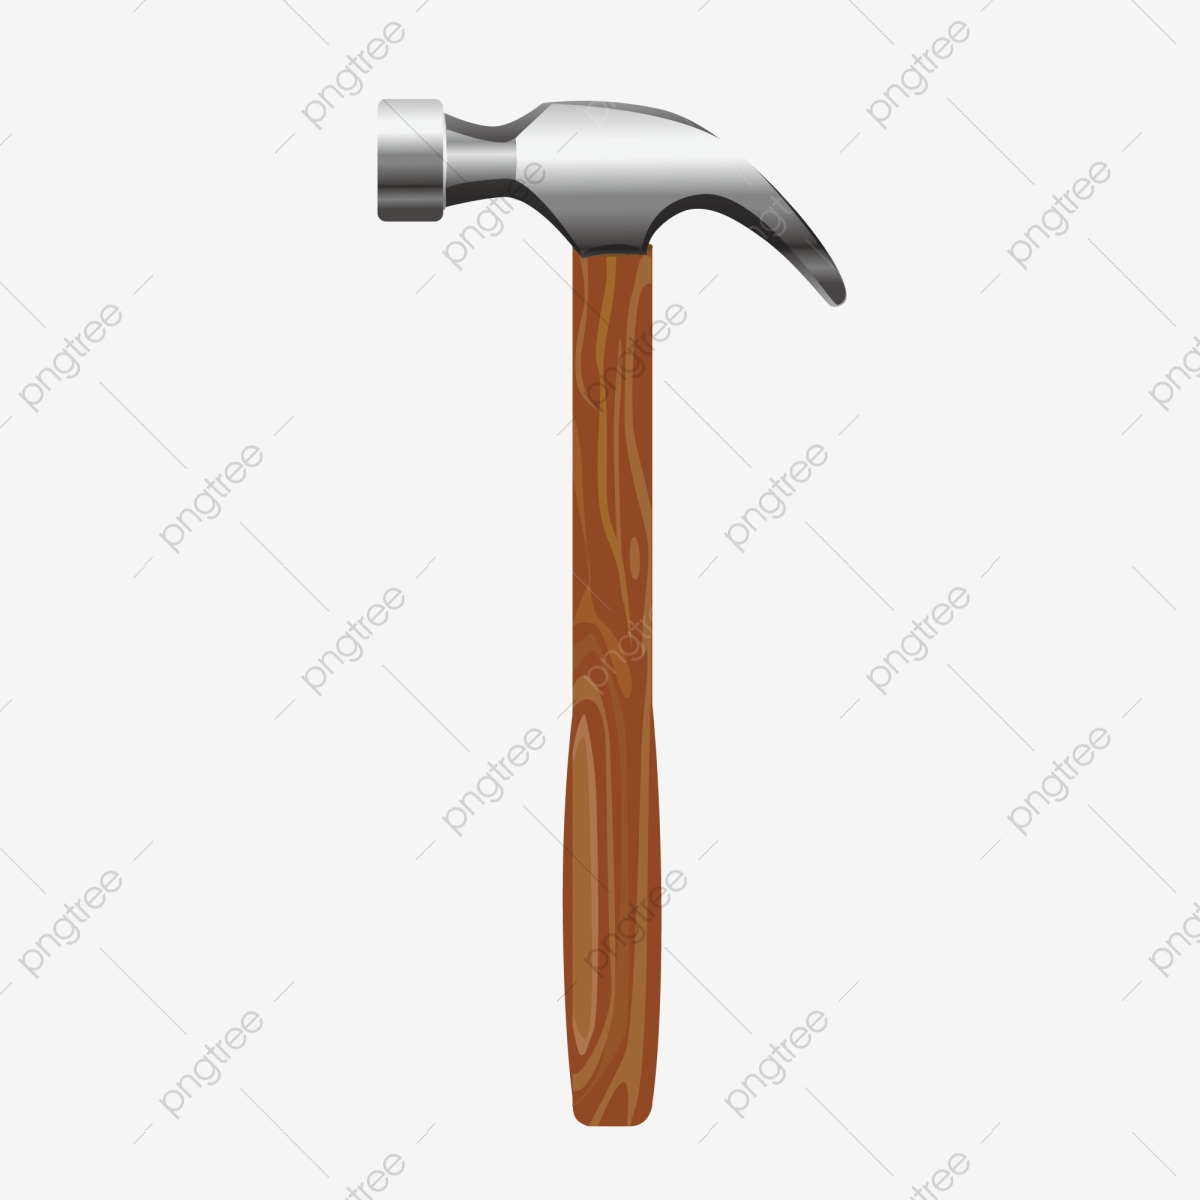 Wooden handle metal cartoon. Clipart hammer home improvement tool